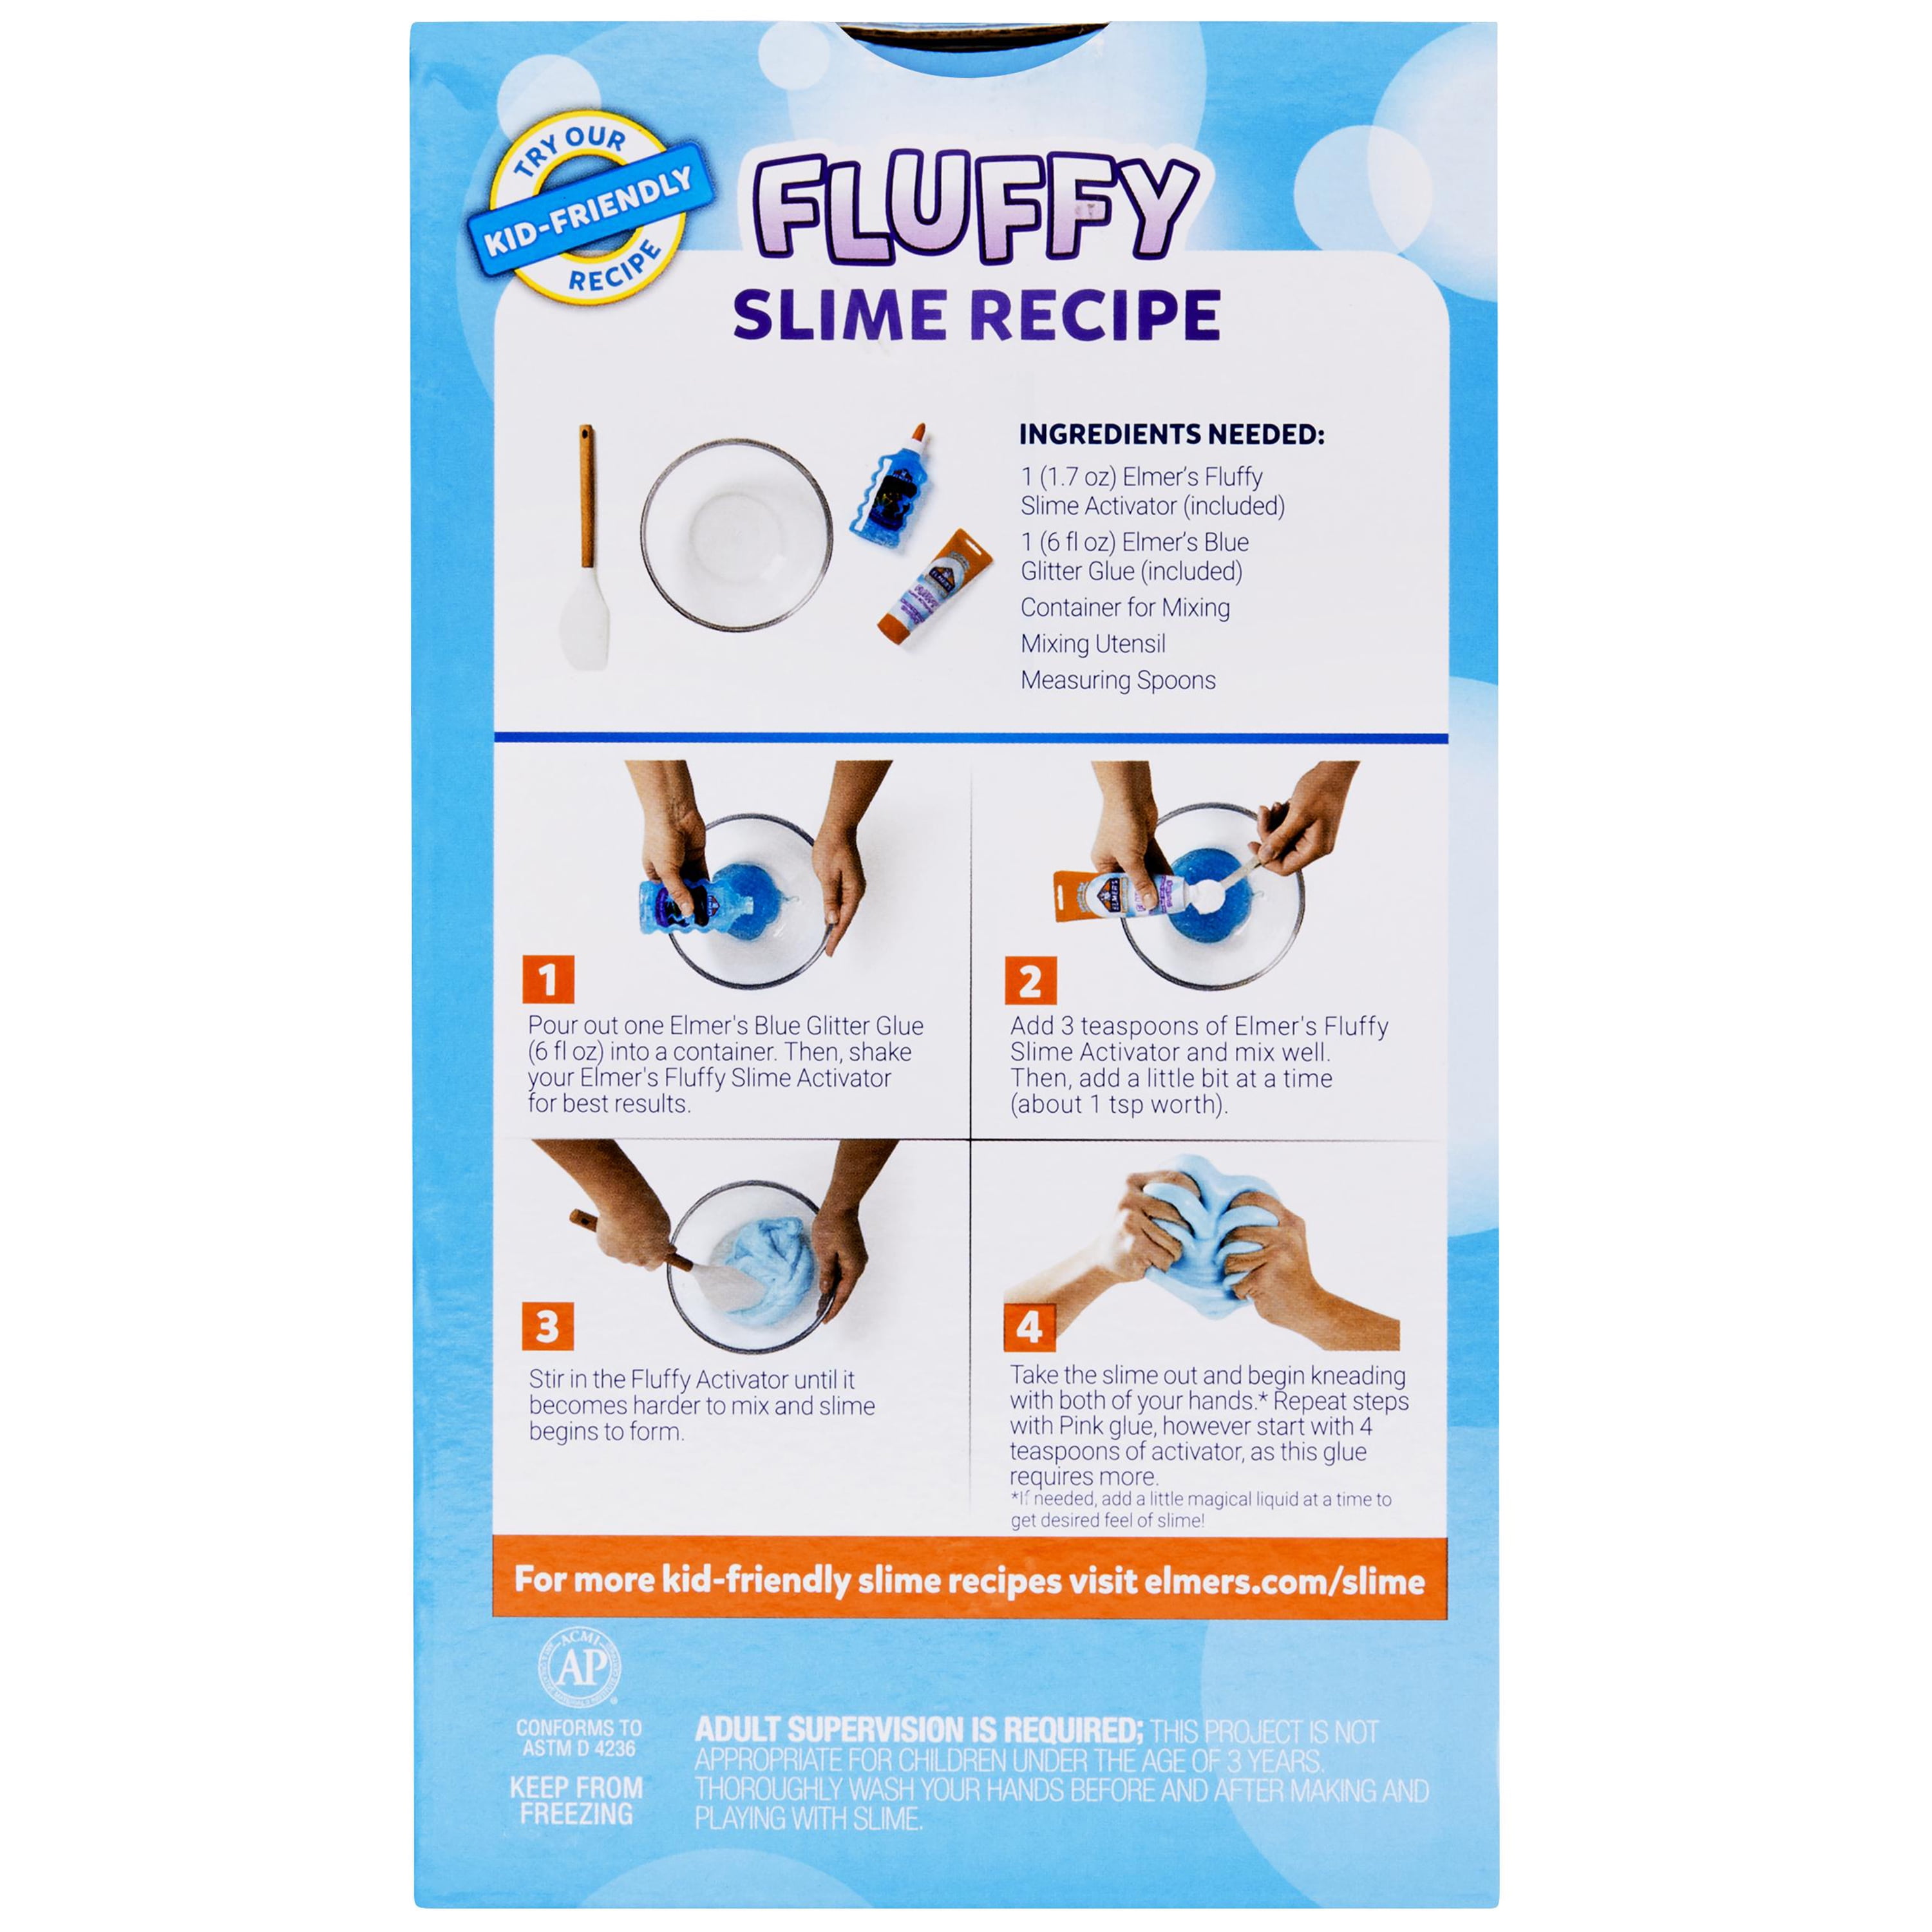 How to Make Fluffy Slime  The BEST Fluffy Slime Recipe